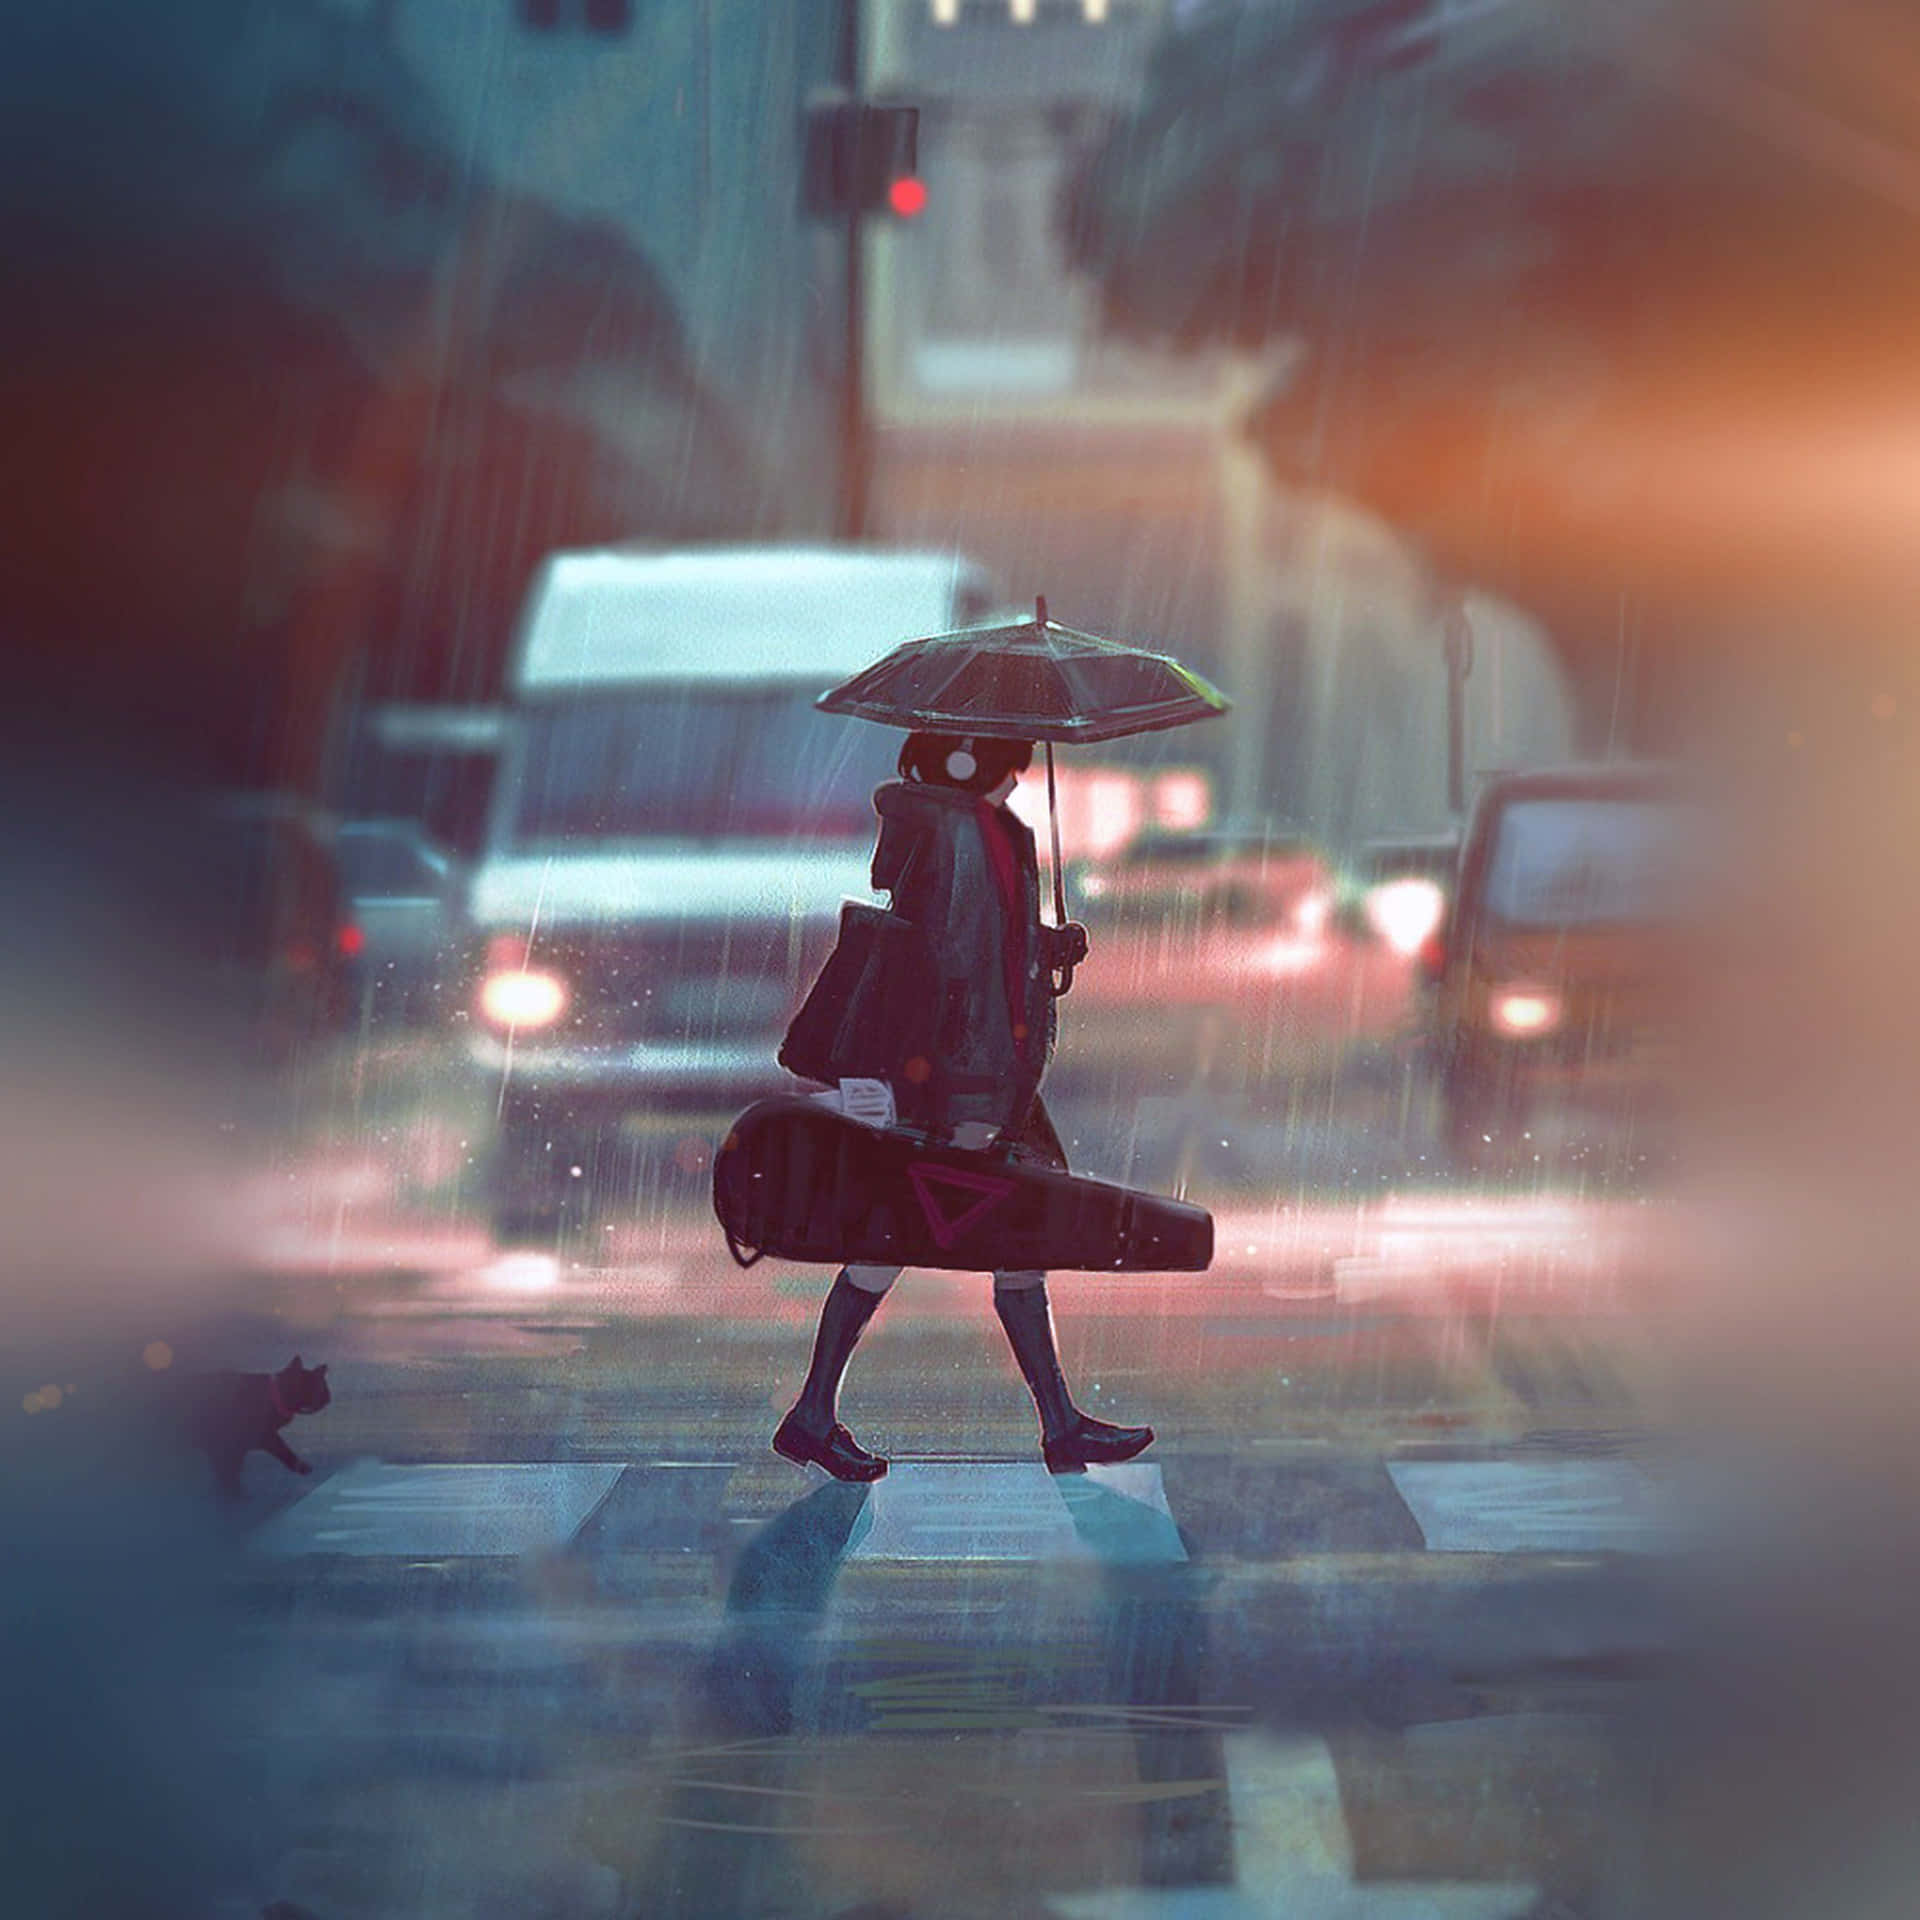 A woman walking down the street with an umbrella - Rain